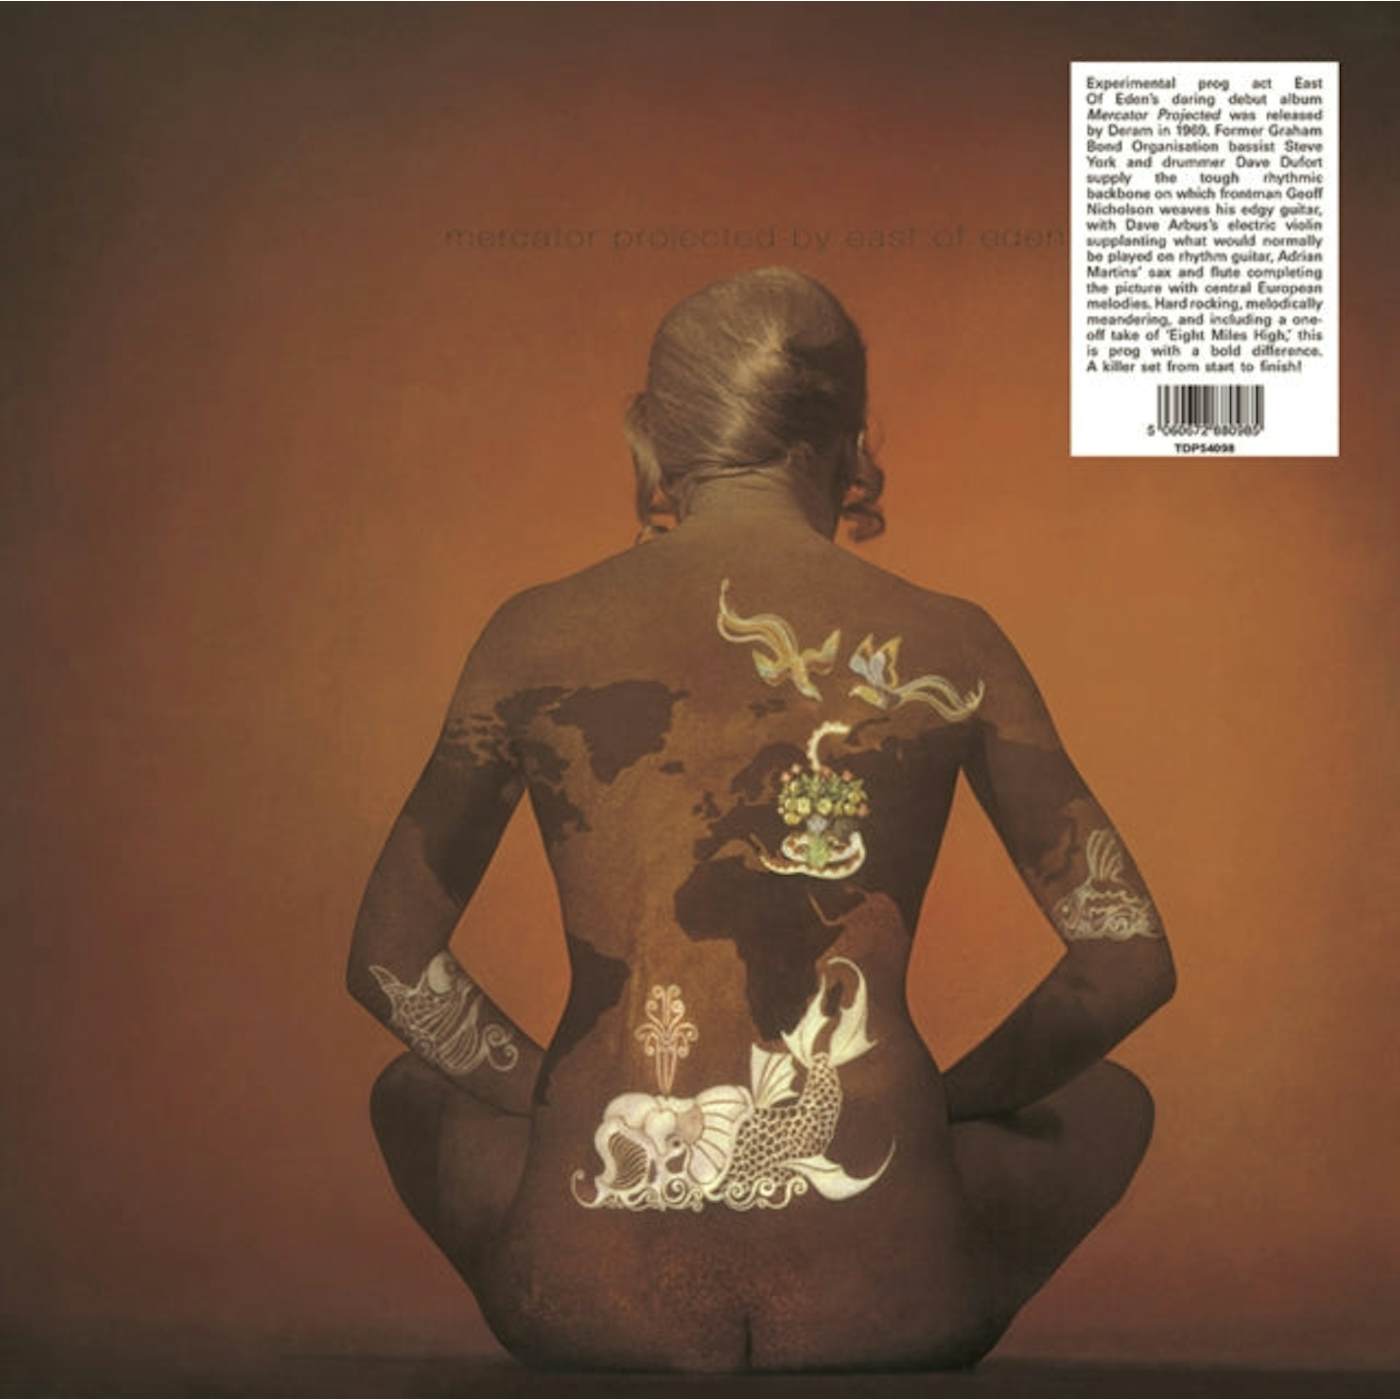 East Of Eden LP Vinyl Record - Mercator Projected